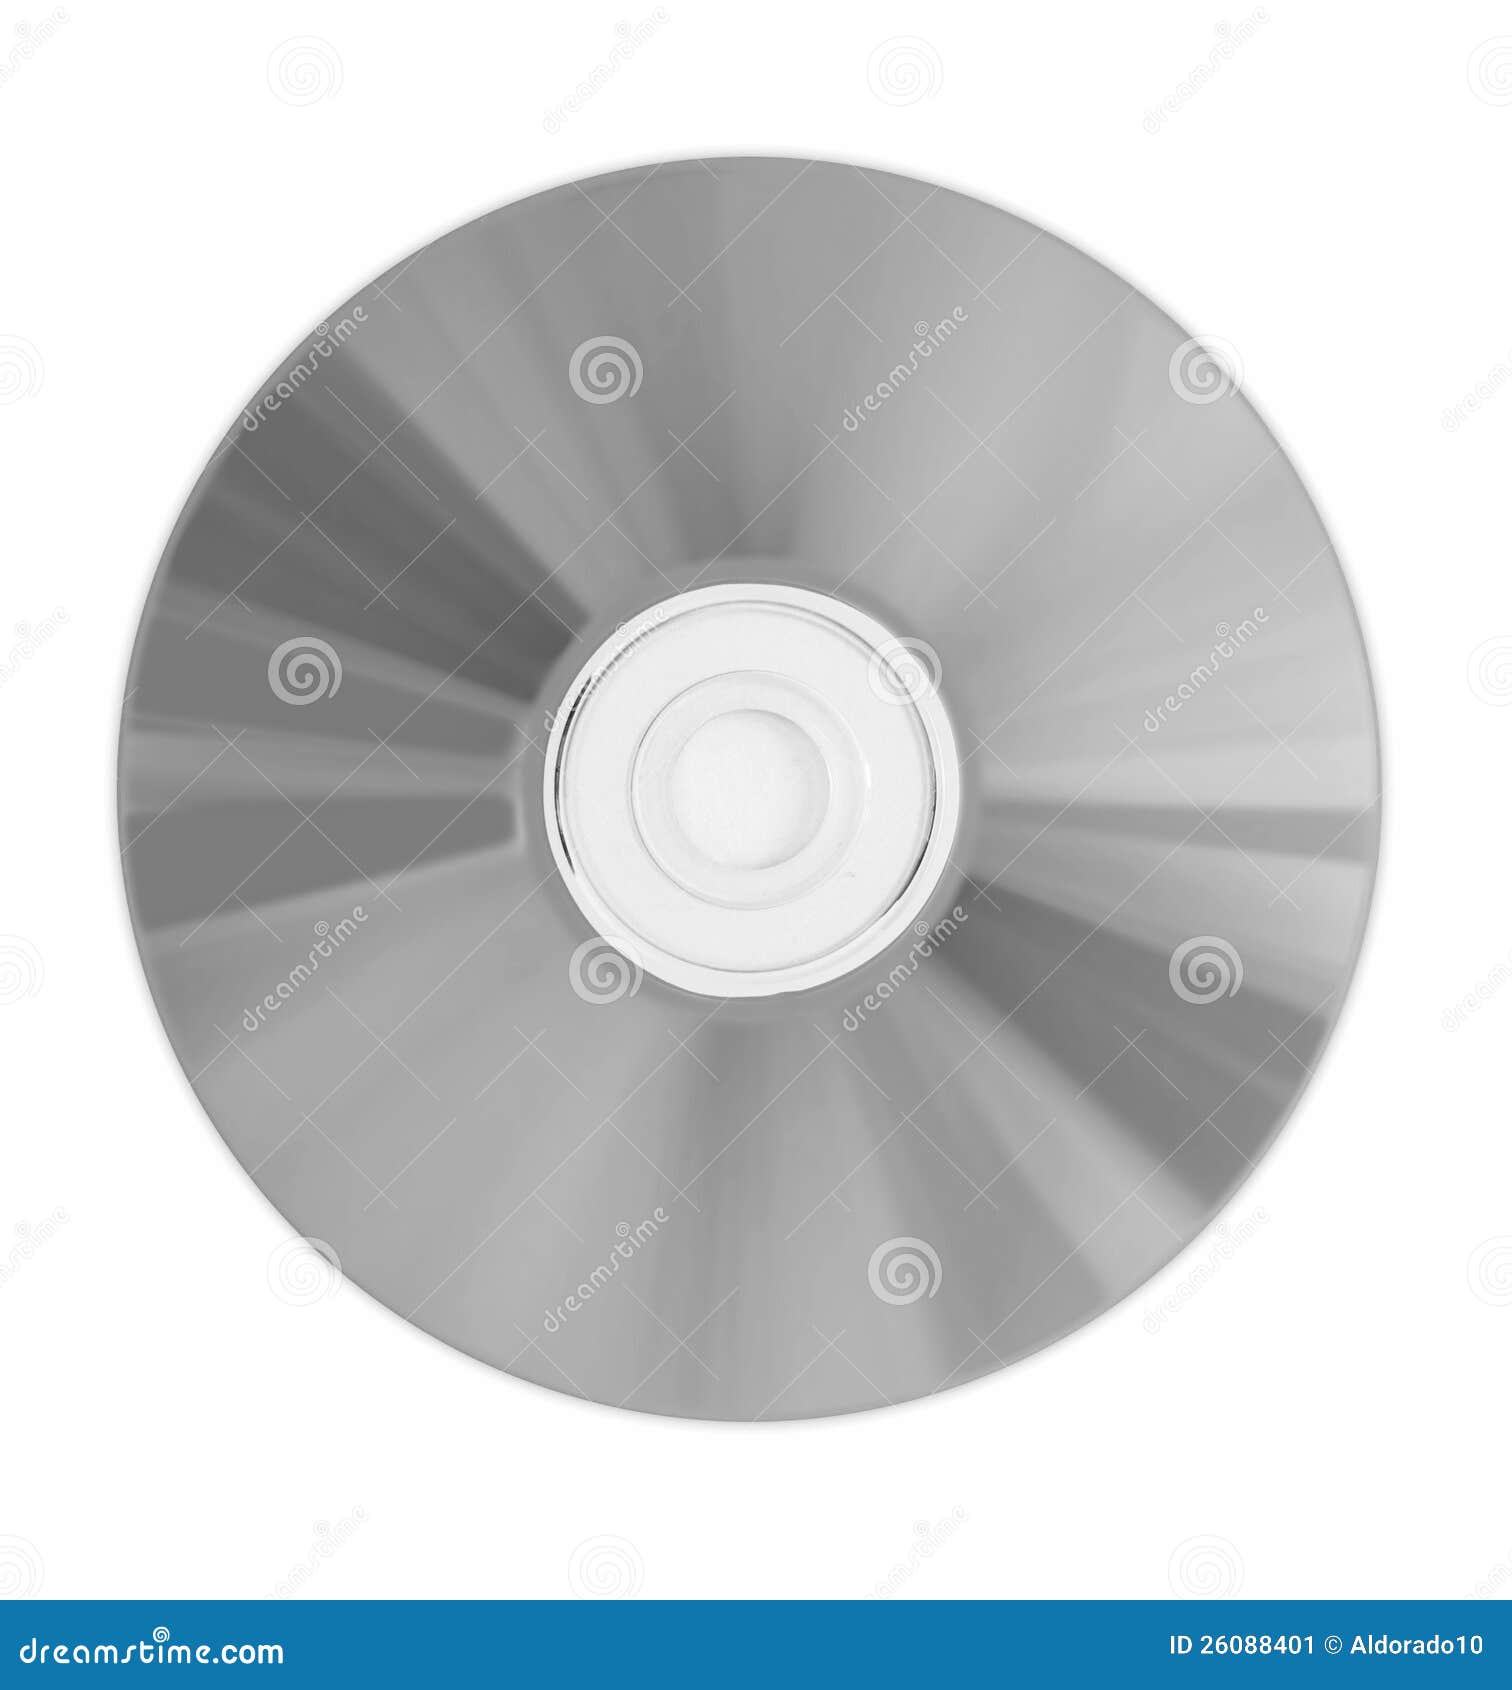 CD DVD Bluray stock image. Image of flashing, copy, record - 26088401